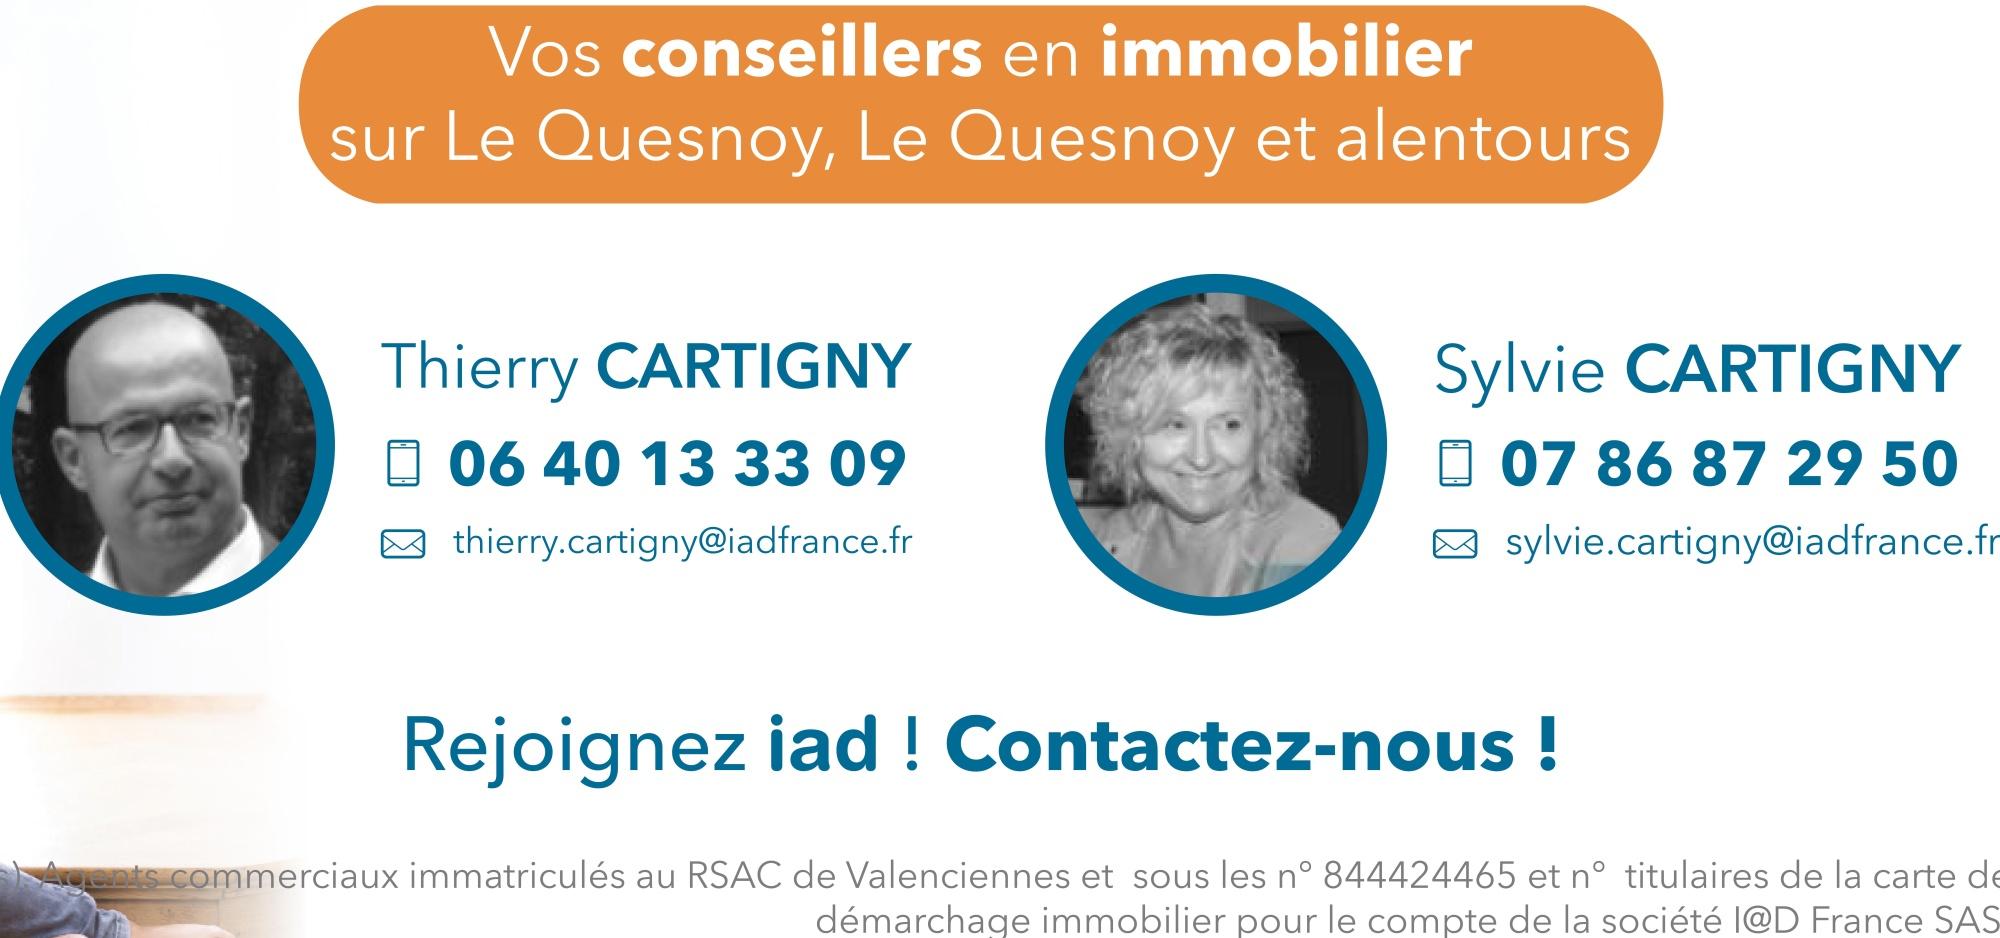 Thierry Cartigny Iad France - Immobilier Le Quesnoy Ruesnes